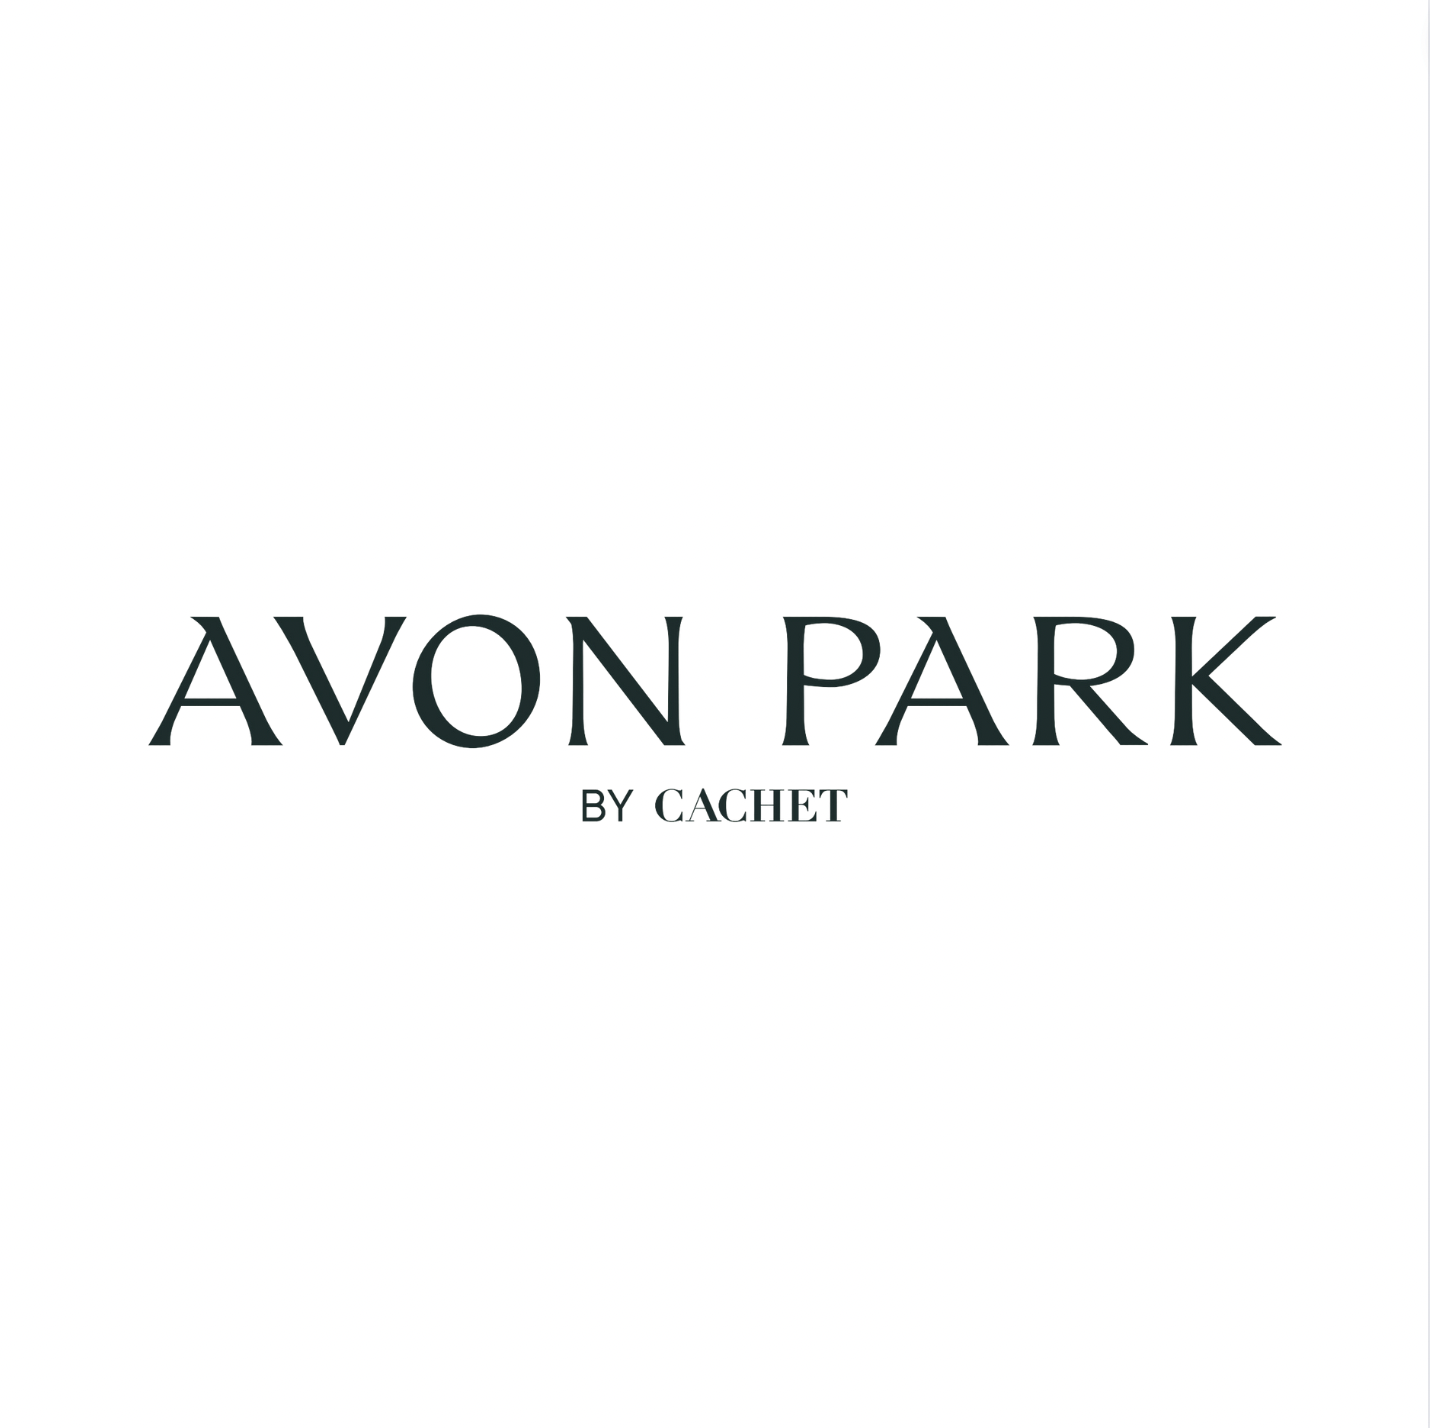 Avon Park